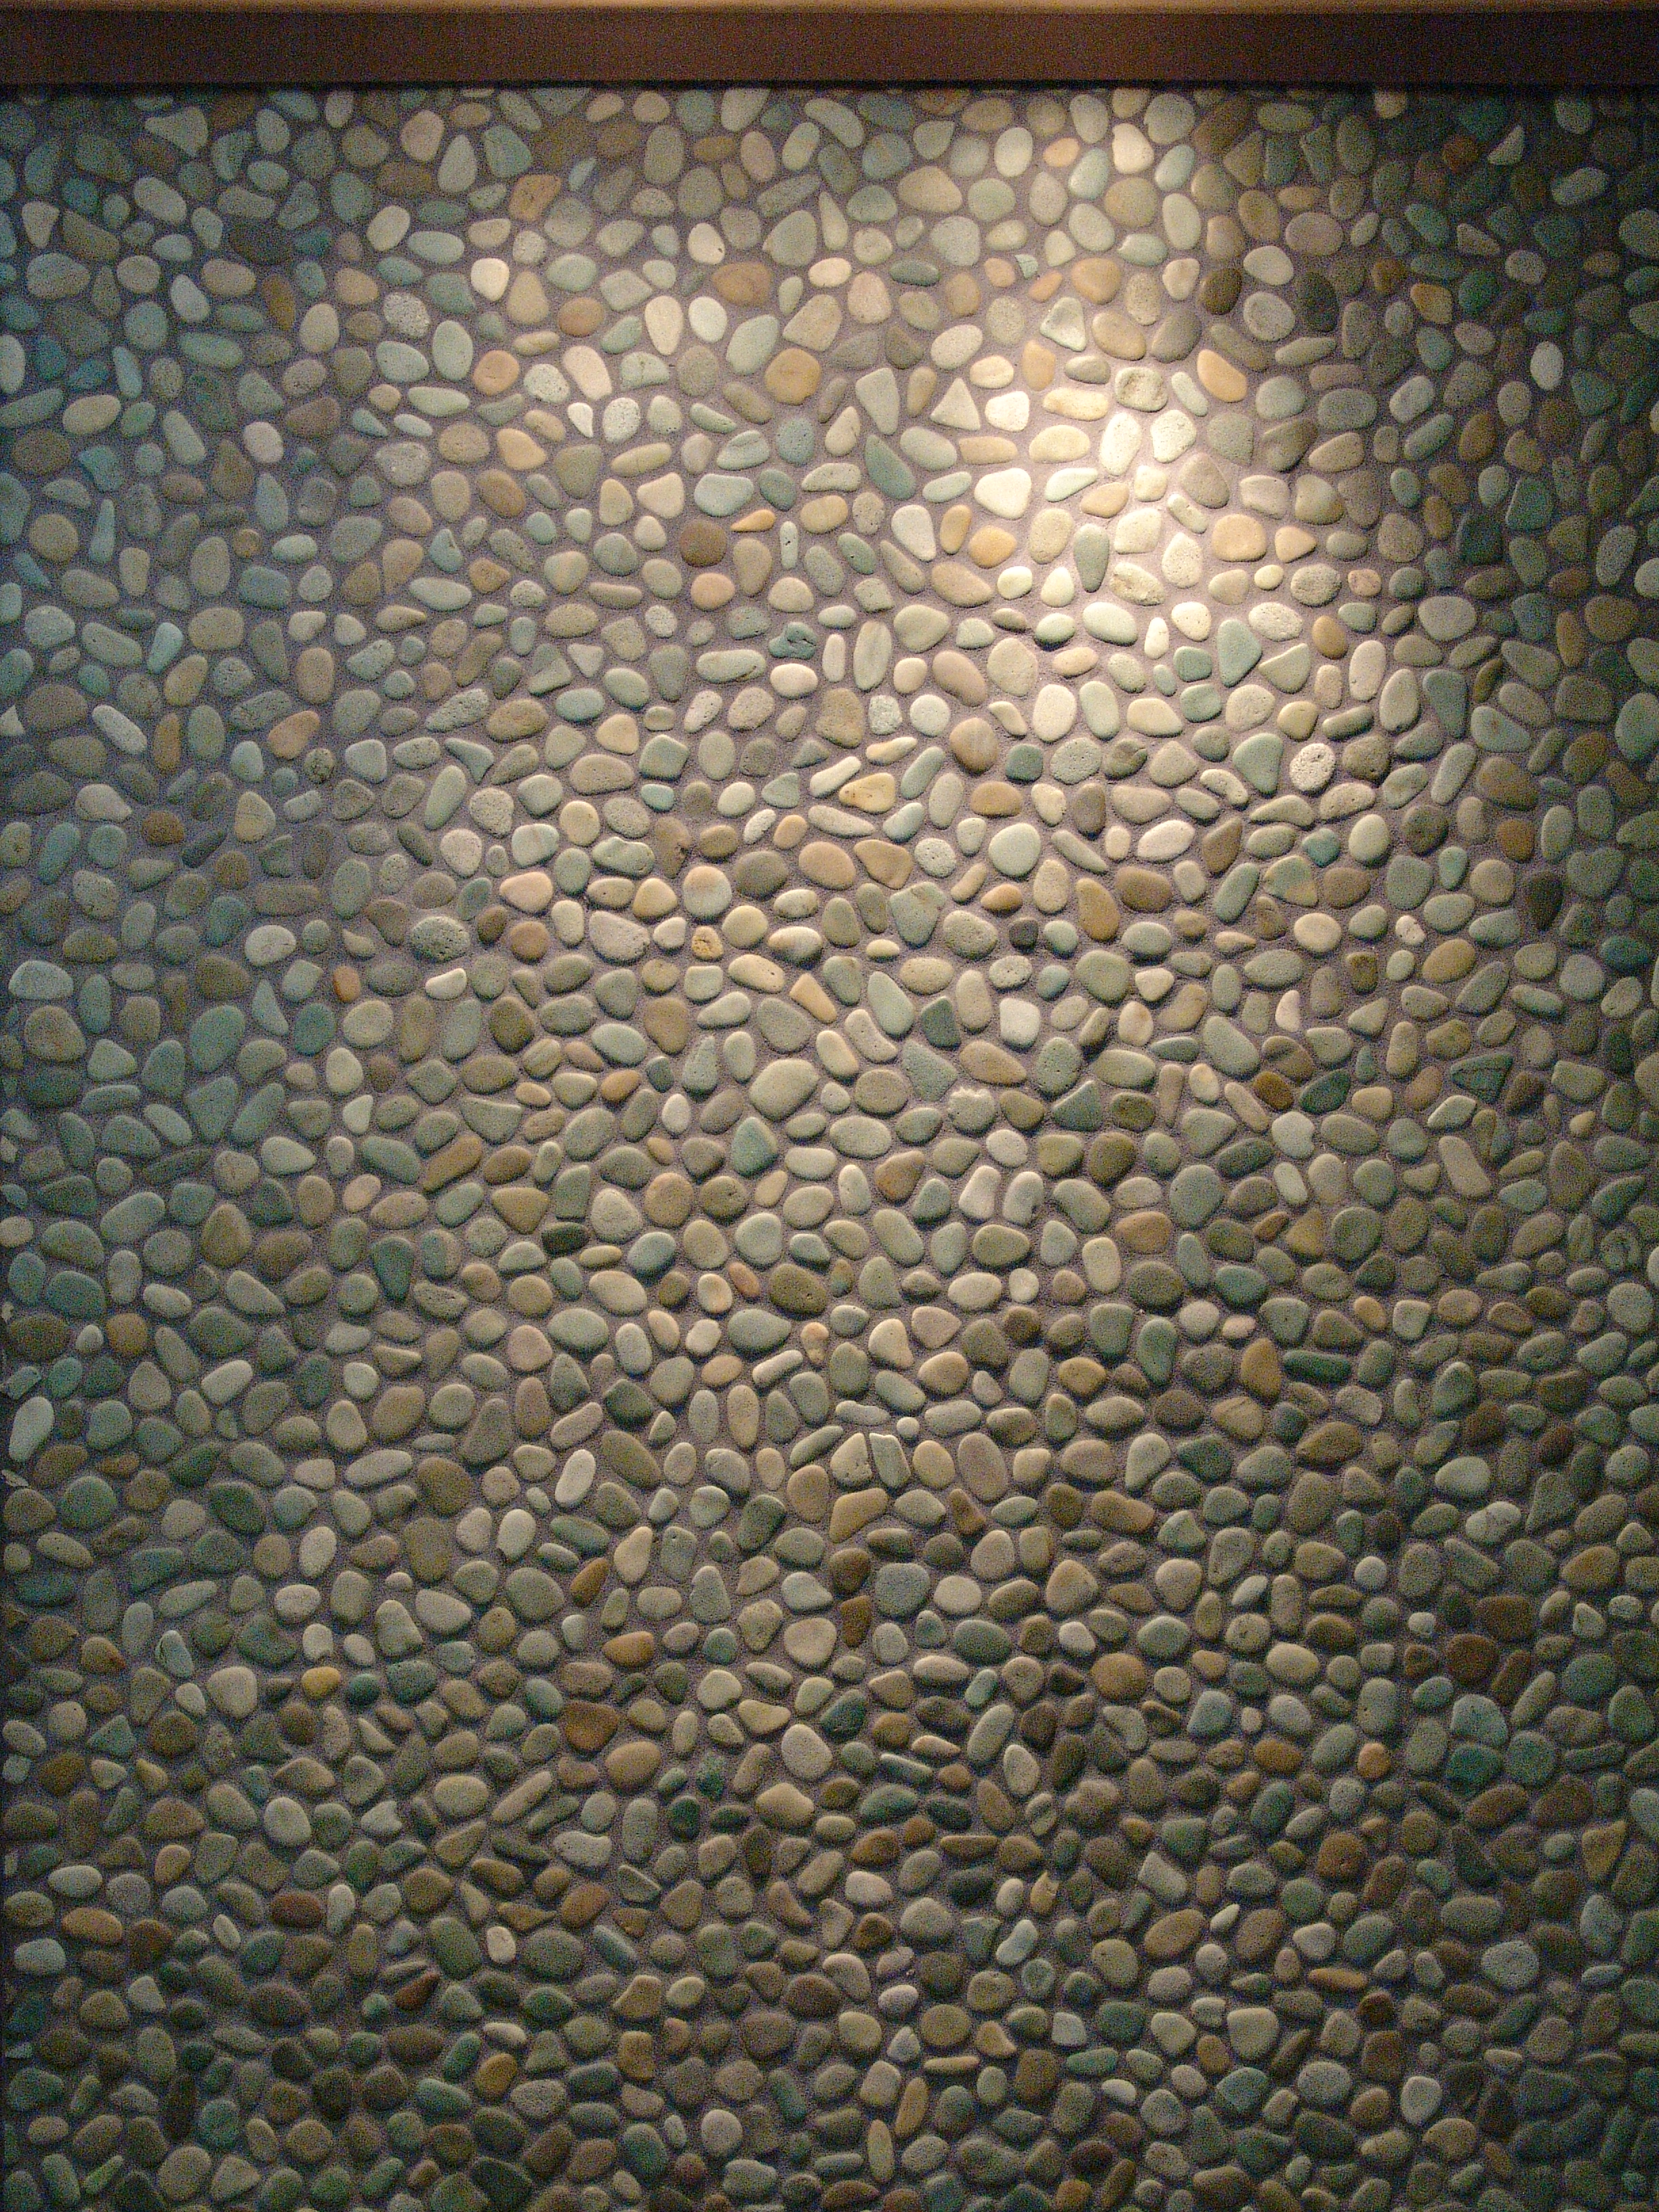 007-pebble mosaic fountain at entrance to salon_3896.JPG